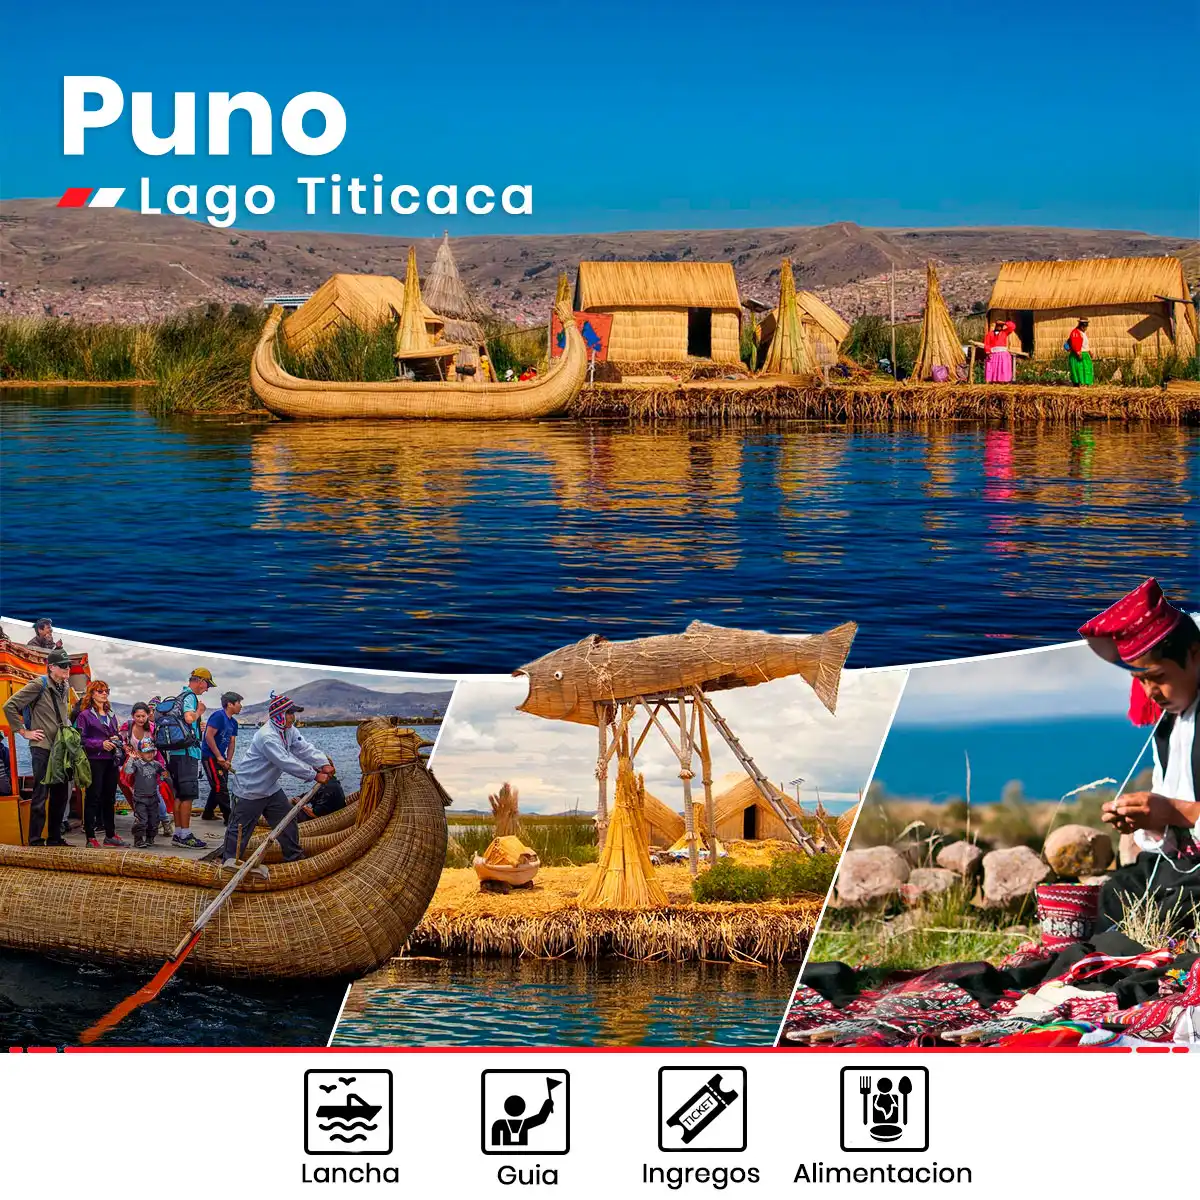 Tour lago titicaca full day puno wa.me/51964265060